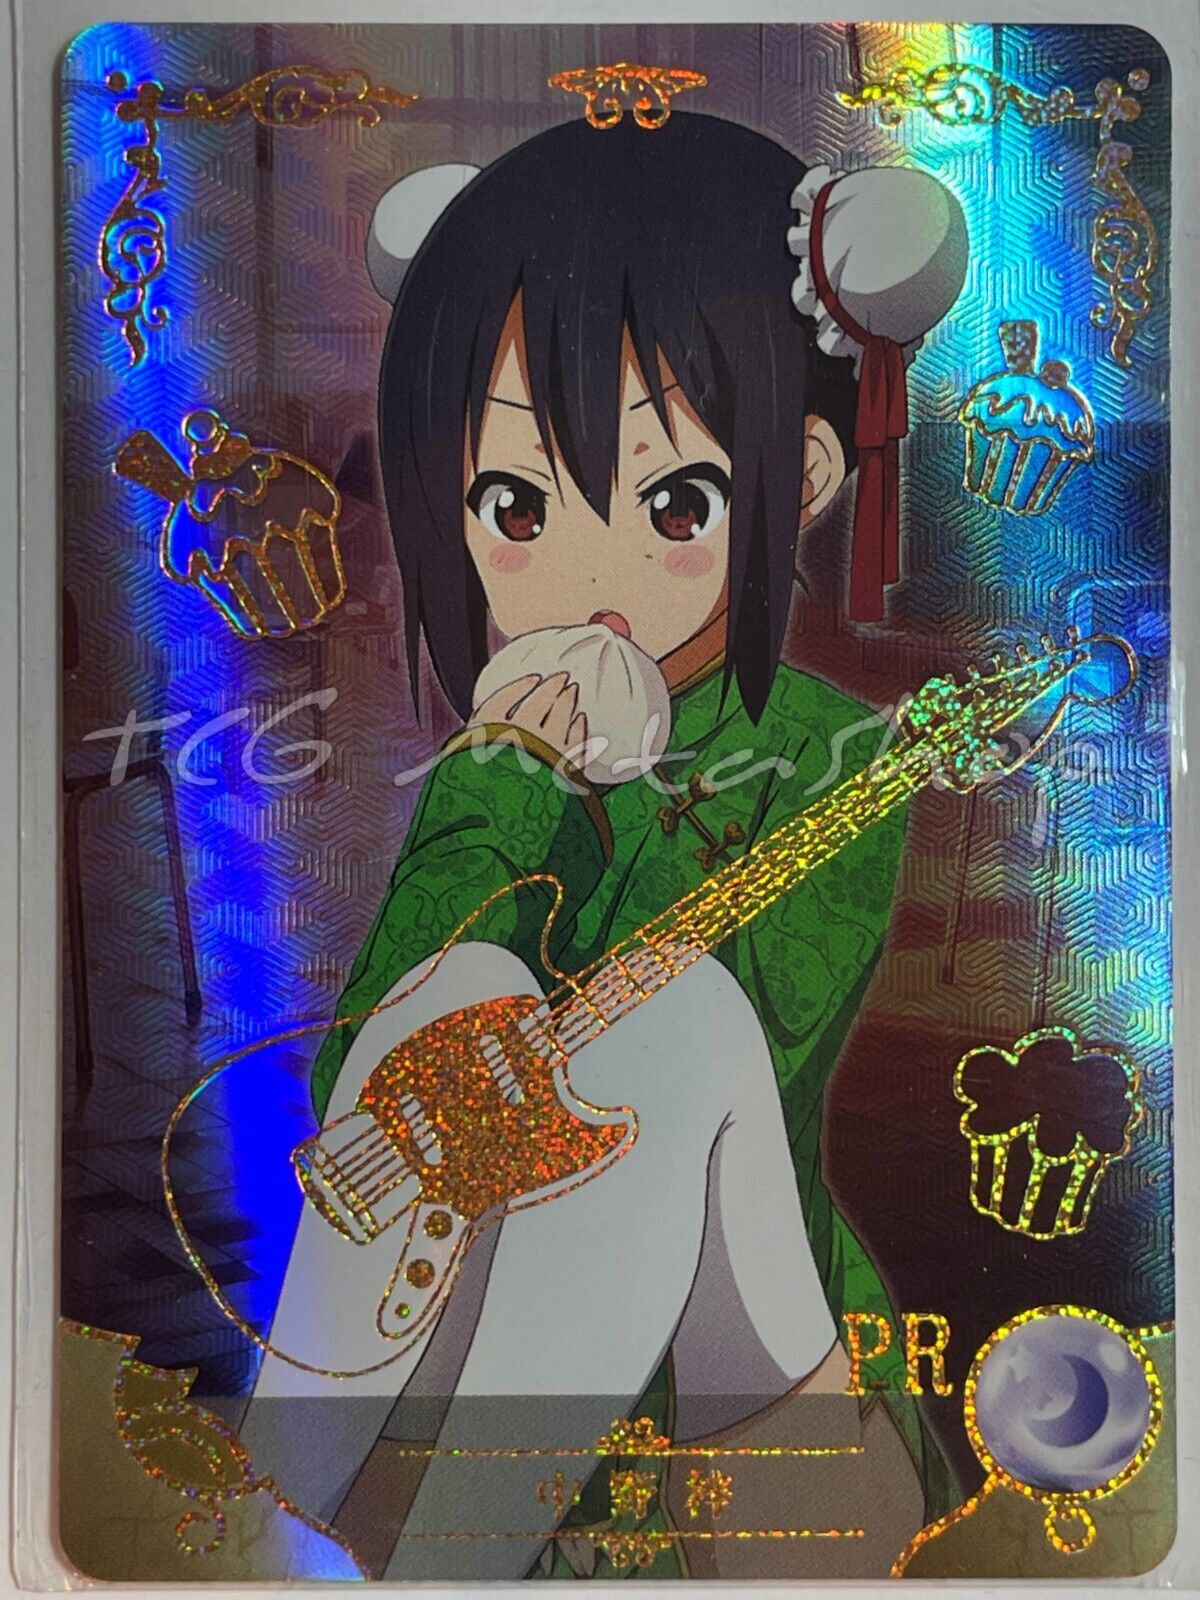 🔥 10m02 [Pick Your PR SSR SR Card 73 - 144] Goddess Story Waifu Anime  🔥